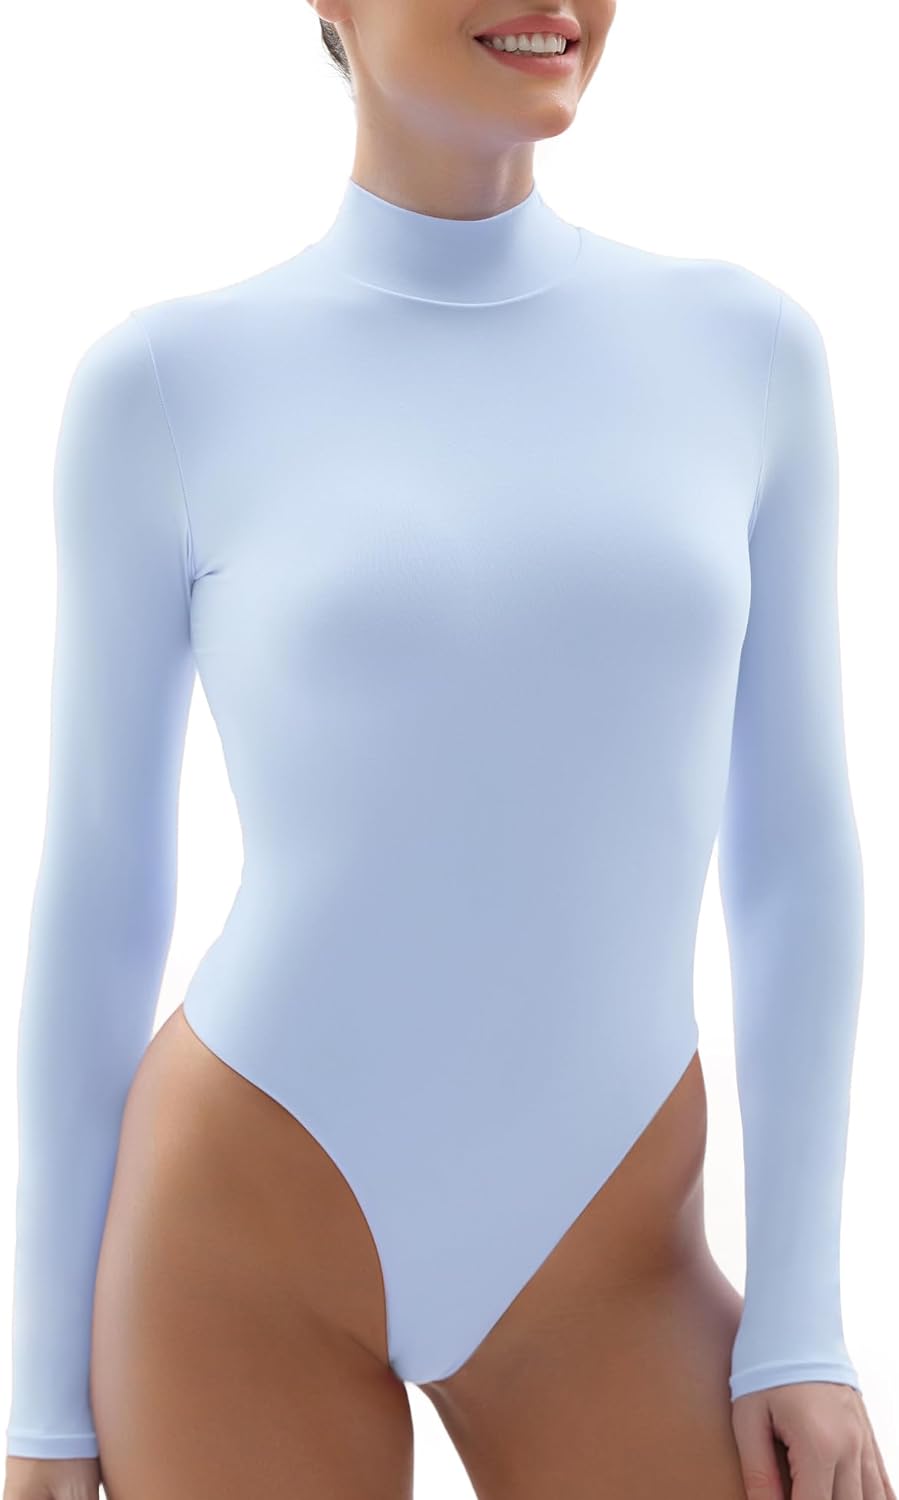 Penkiiy Women's V Neck Long Sleeve Tops Bodysuit Double Lined Shirt Tops  Blue Shapewear Tummy Control